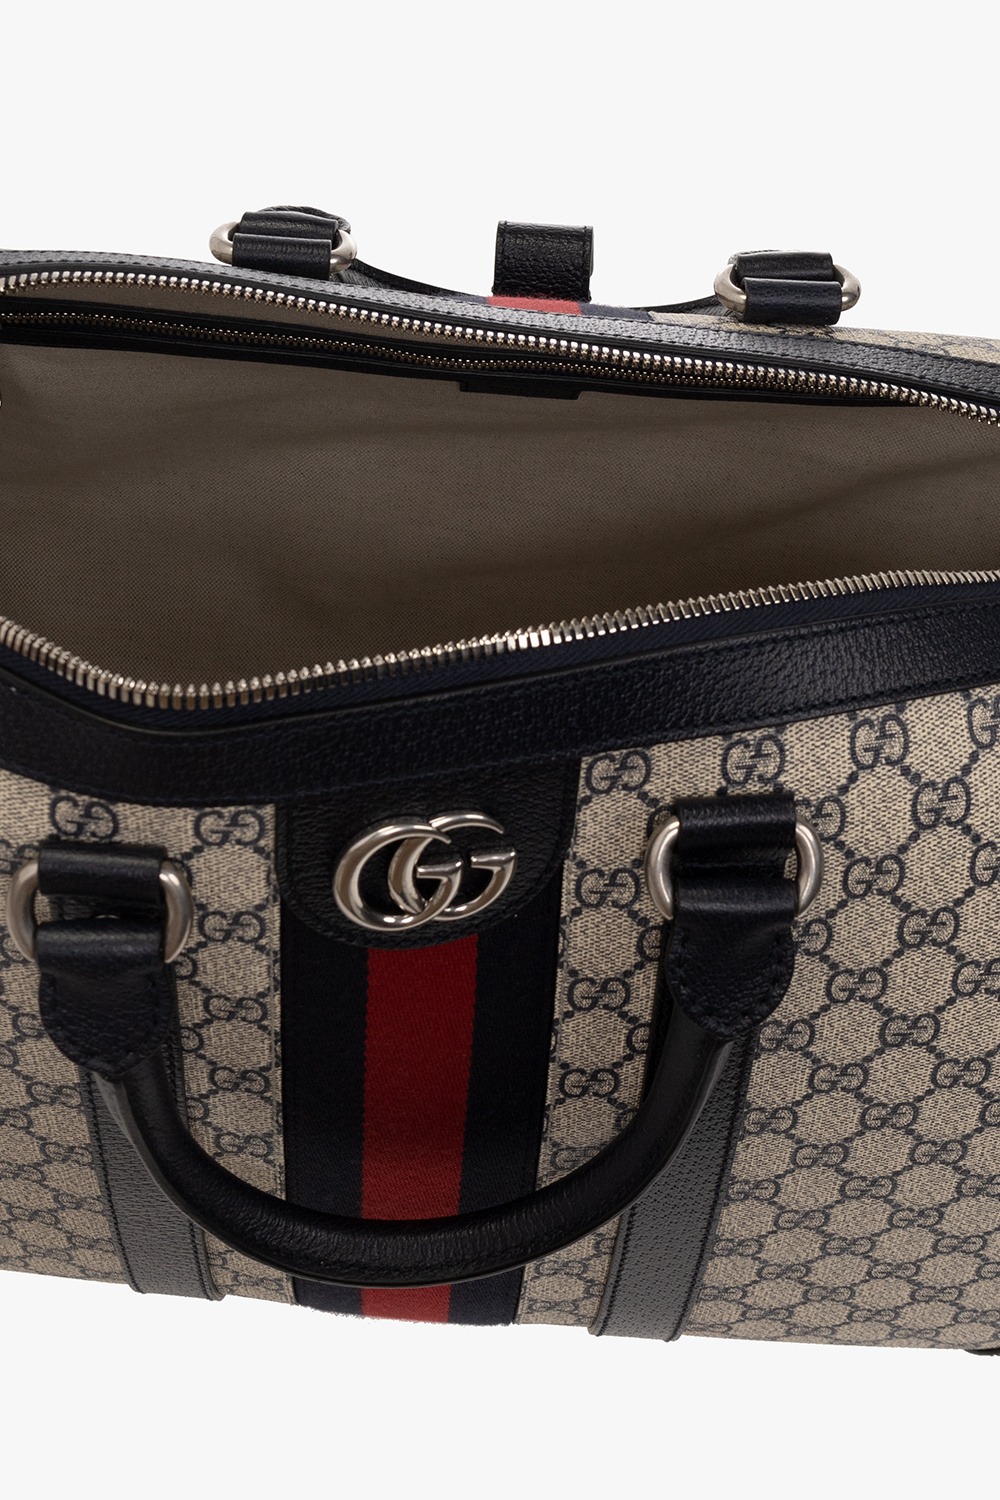 Gucci ‘Ophidia Small’ duffel bag